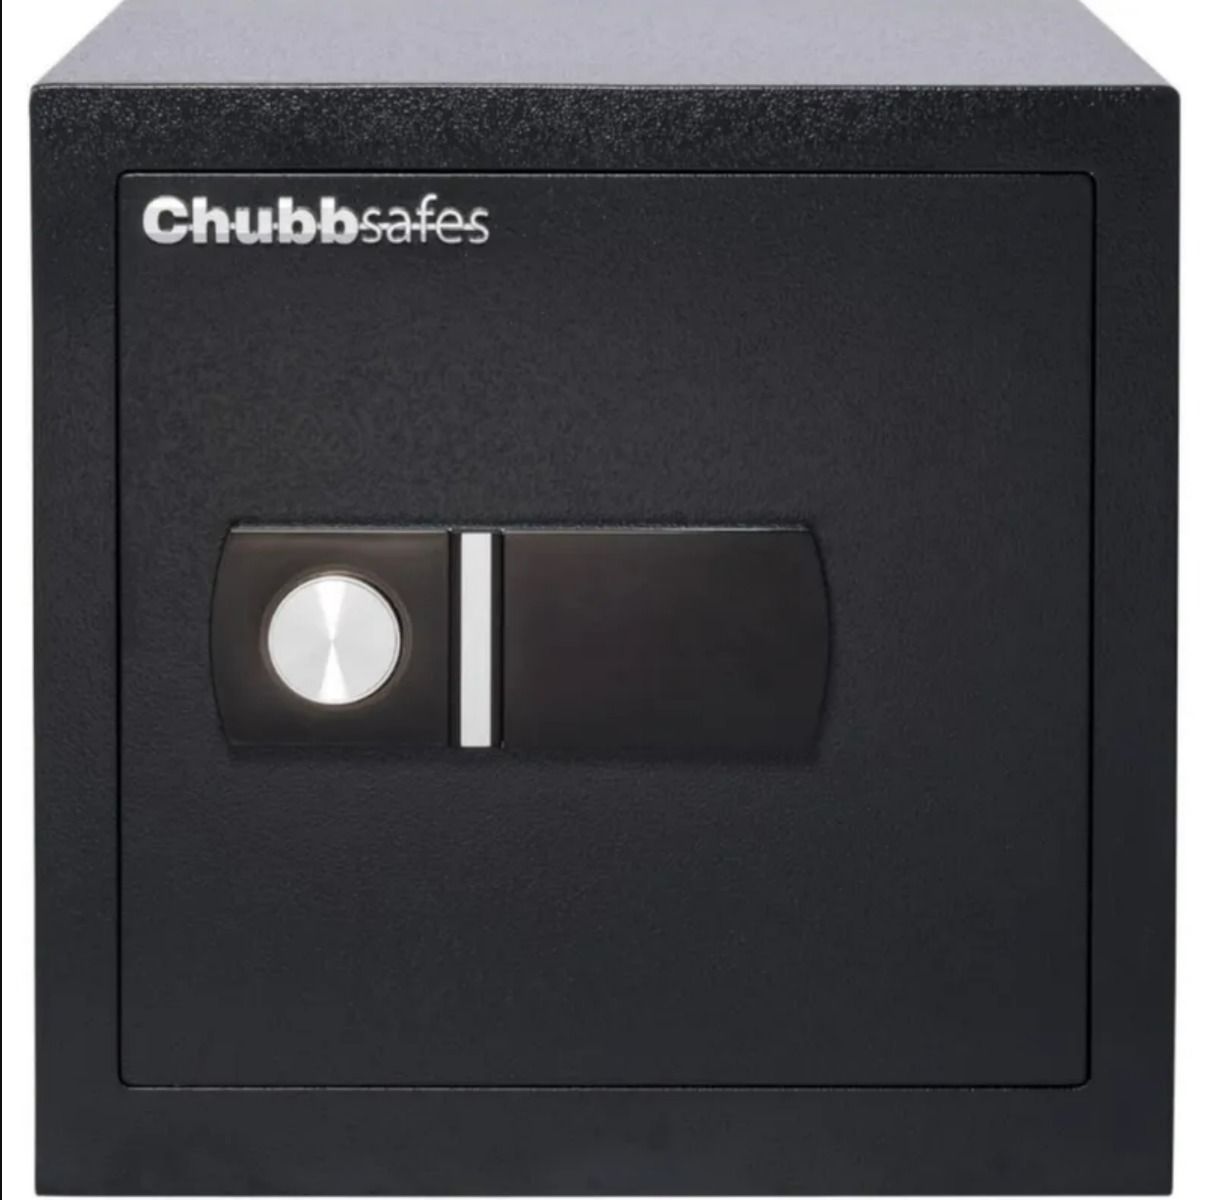 Chubbsafes - Homestar 56E Safe, Electronic Lock